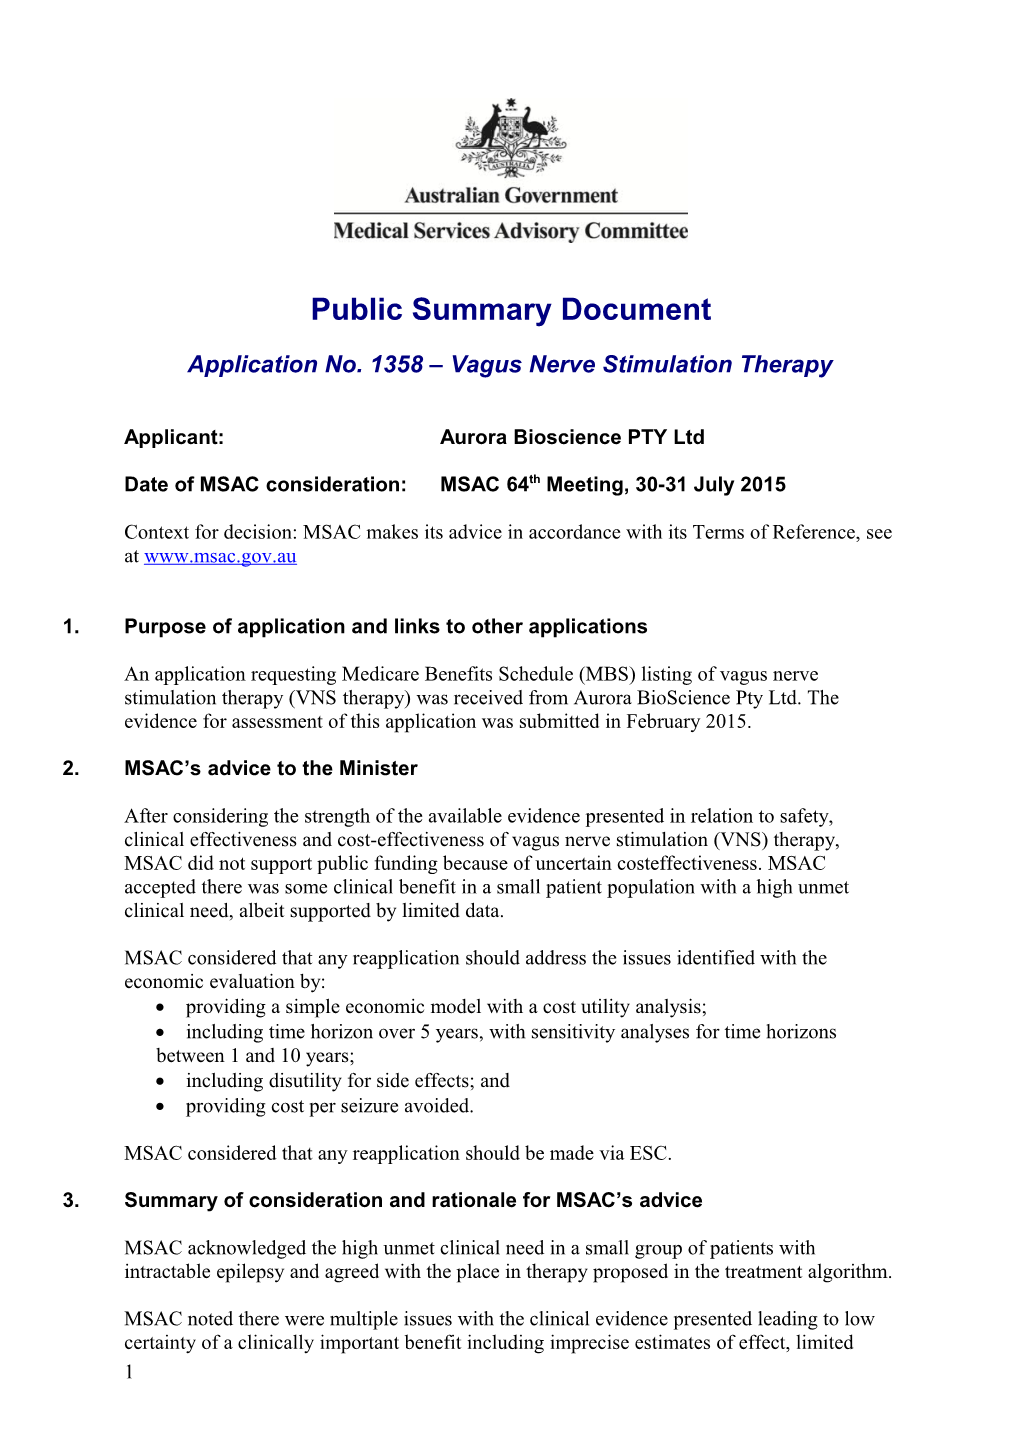 Application No. 1358 Vagus Nerve Stimulation Therapy